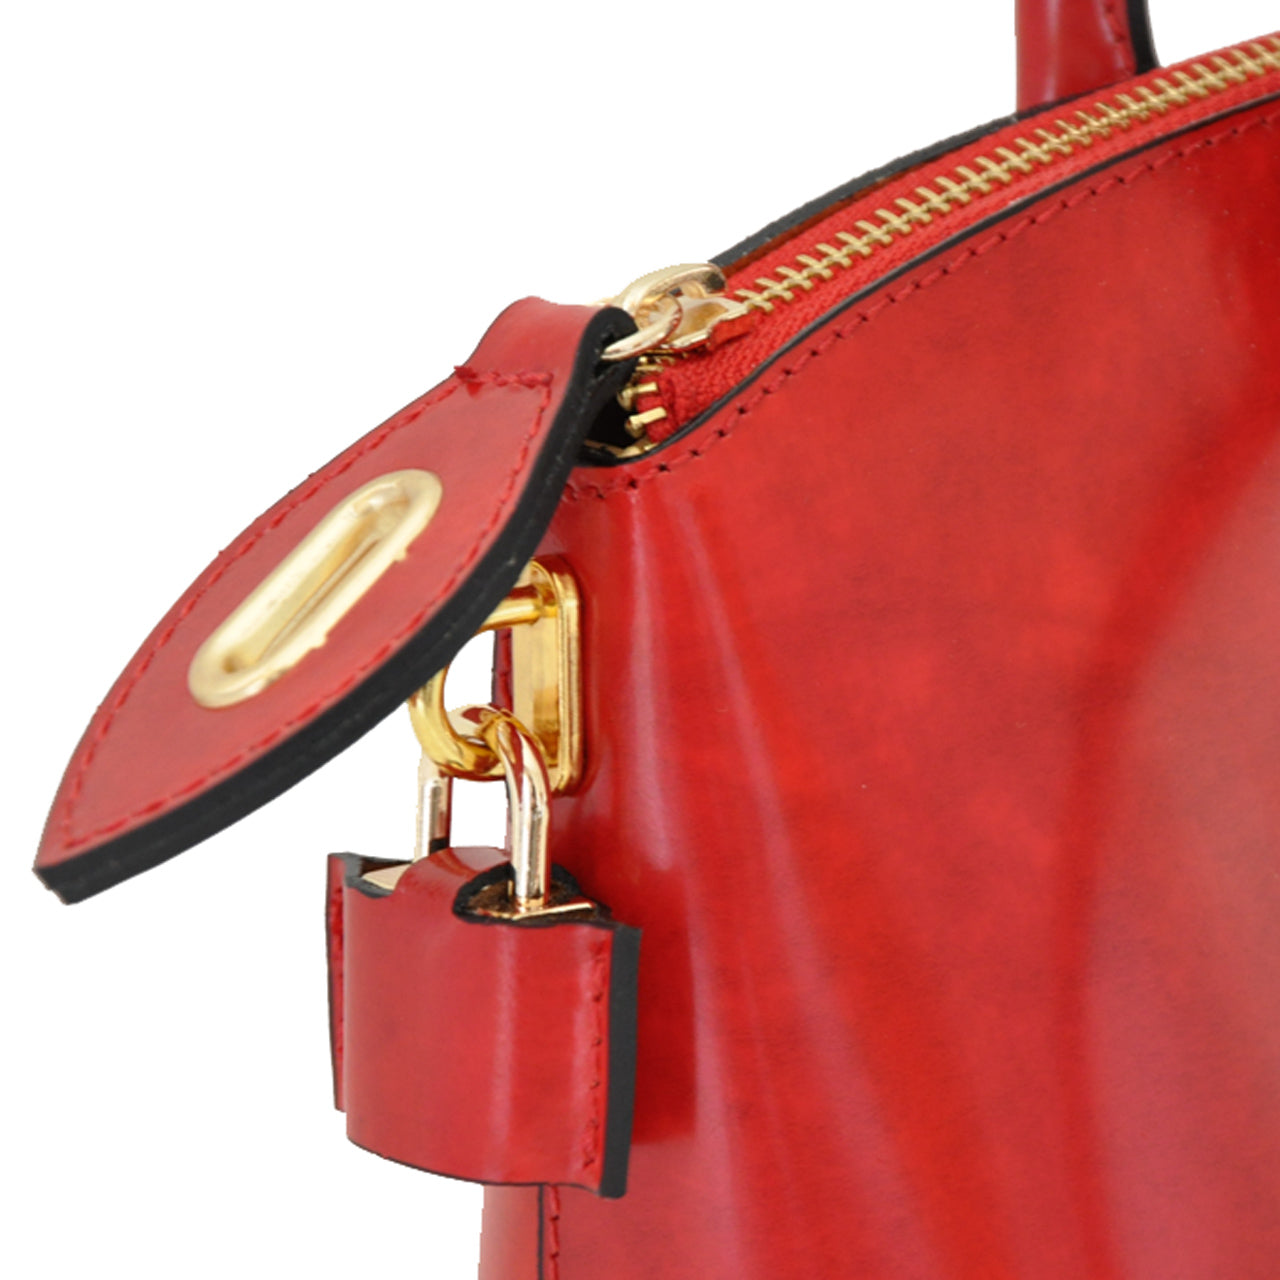 Pratesi Versilia Small Handbag in genuine Italian leather - Brunelleschi Leather White